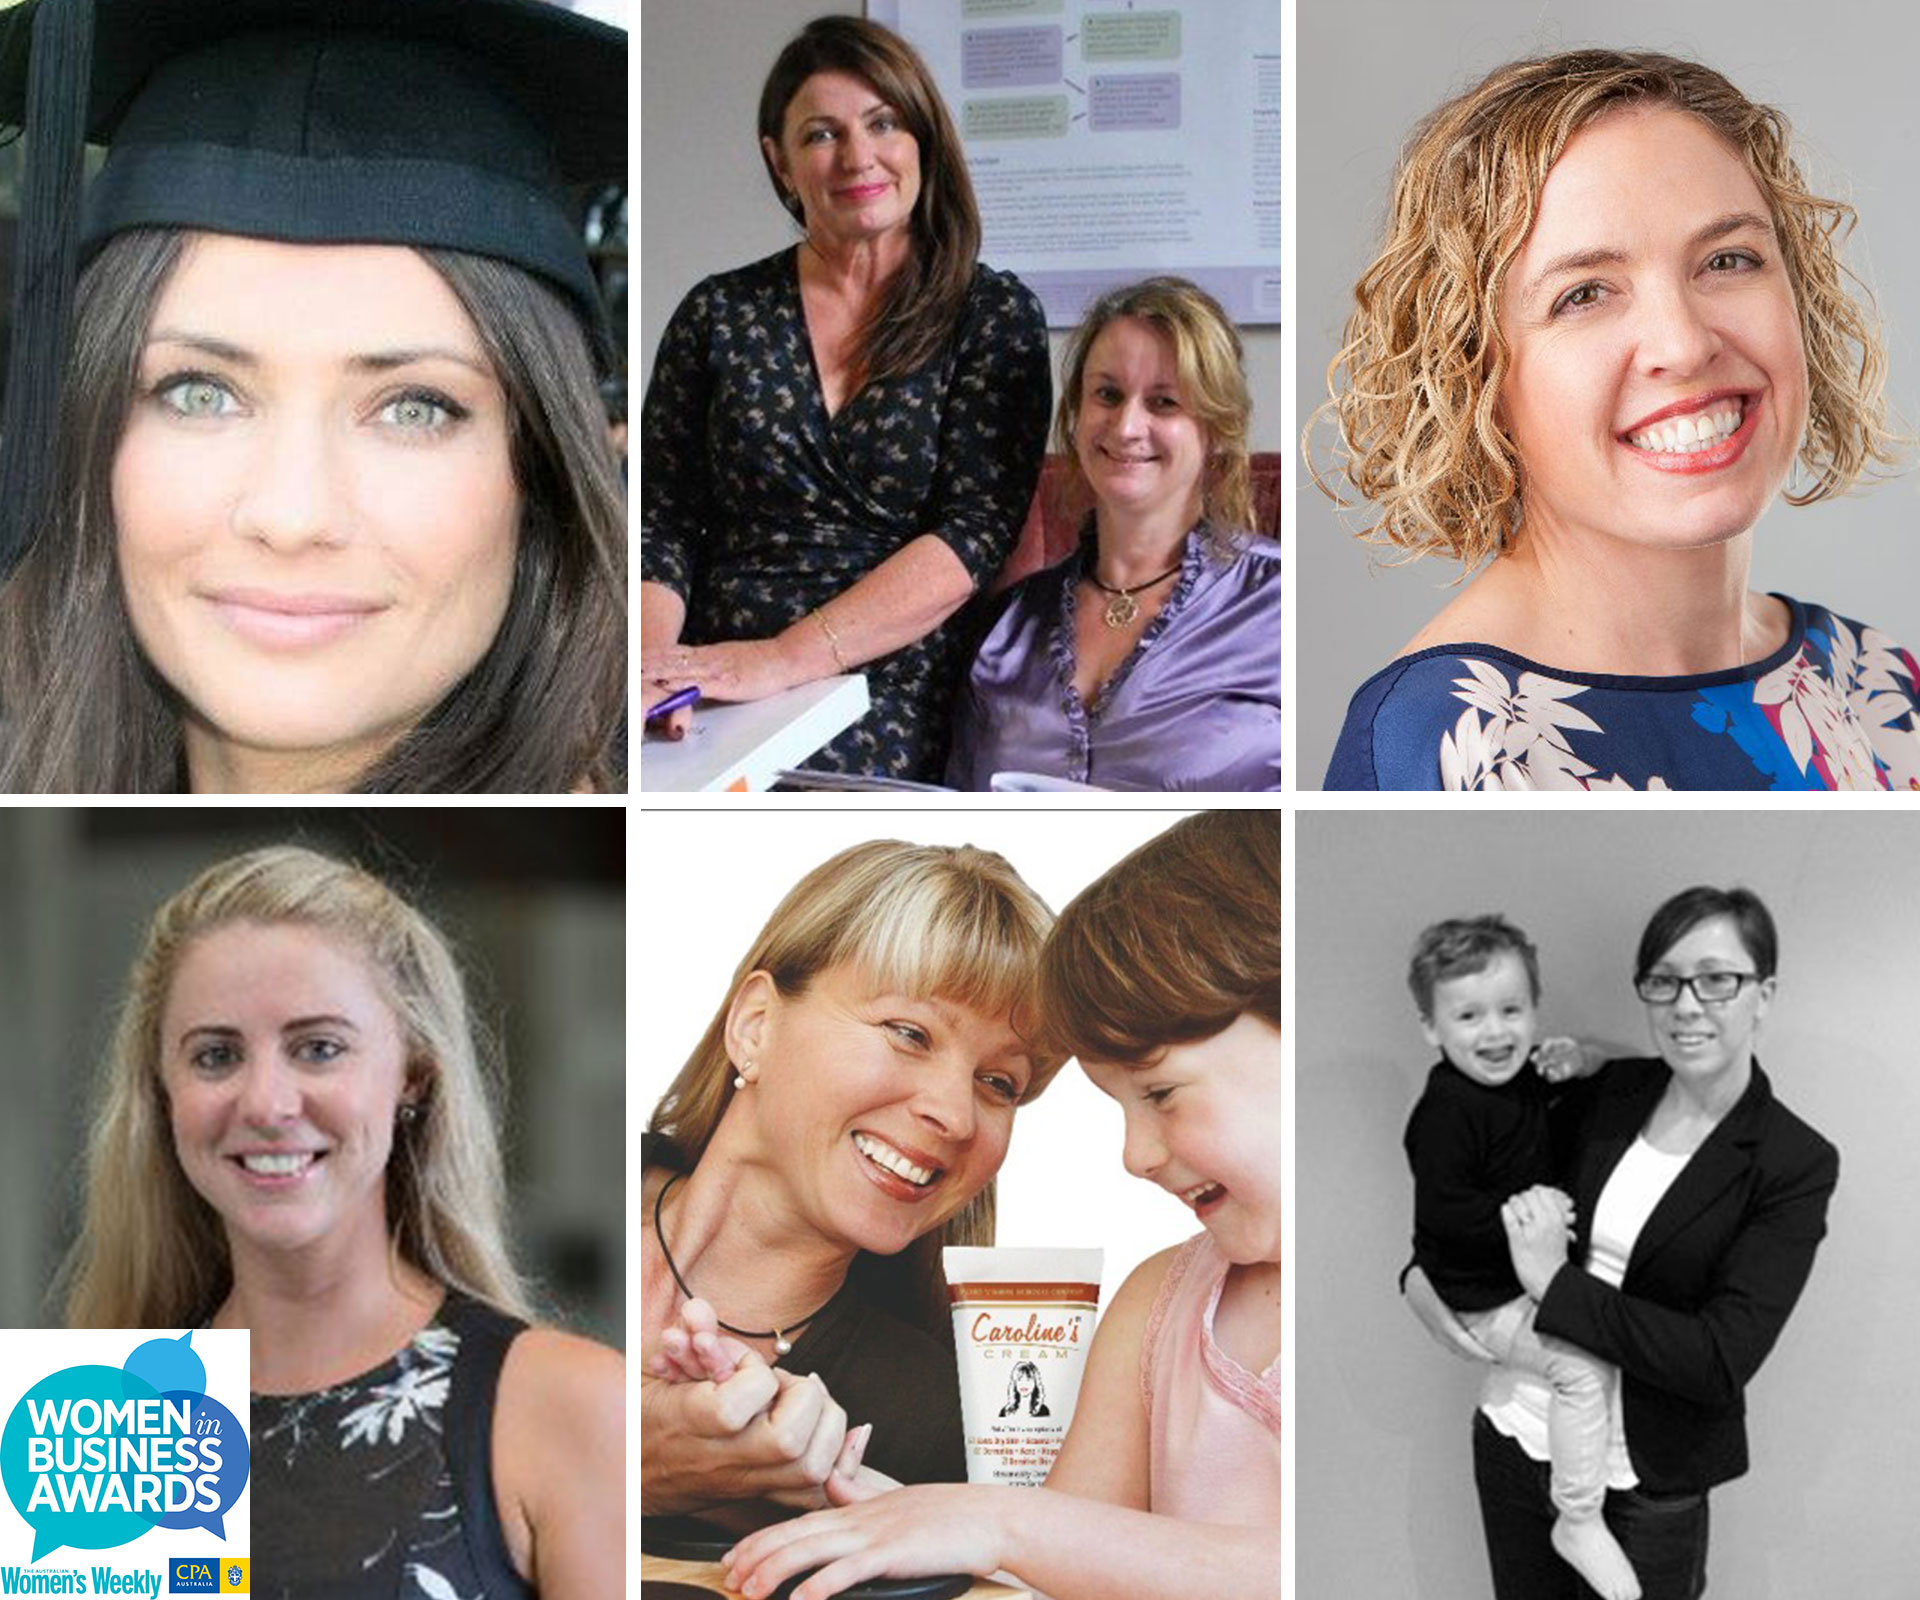 Meet our Women in Business Awards winners!